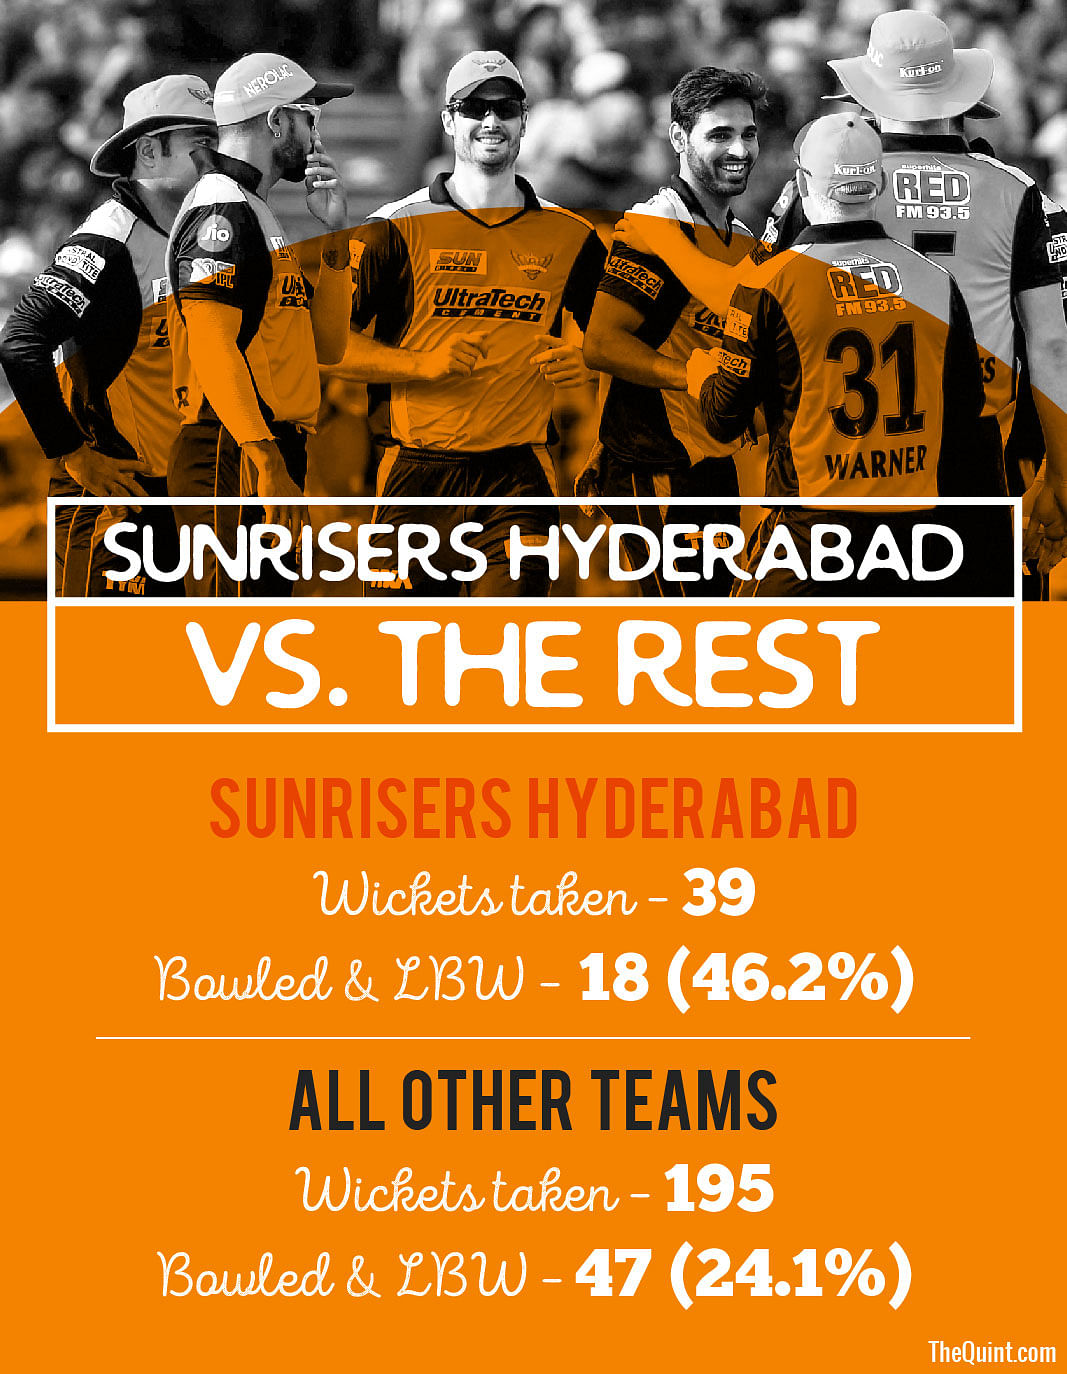 Sunrisers Hyderabad’s success formula.